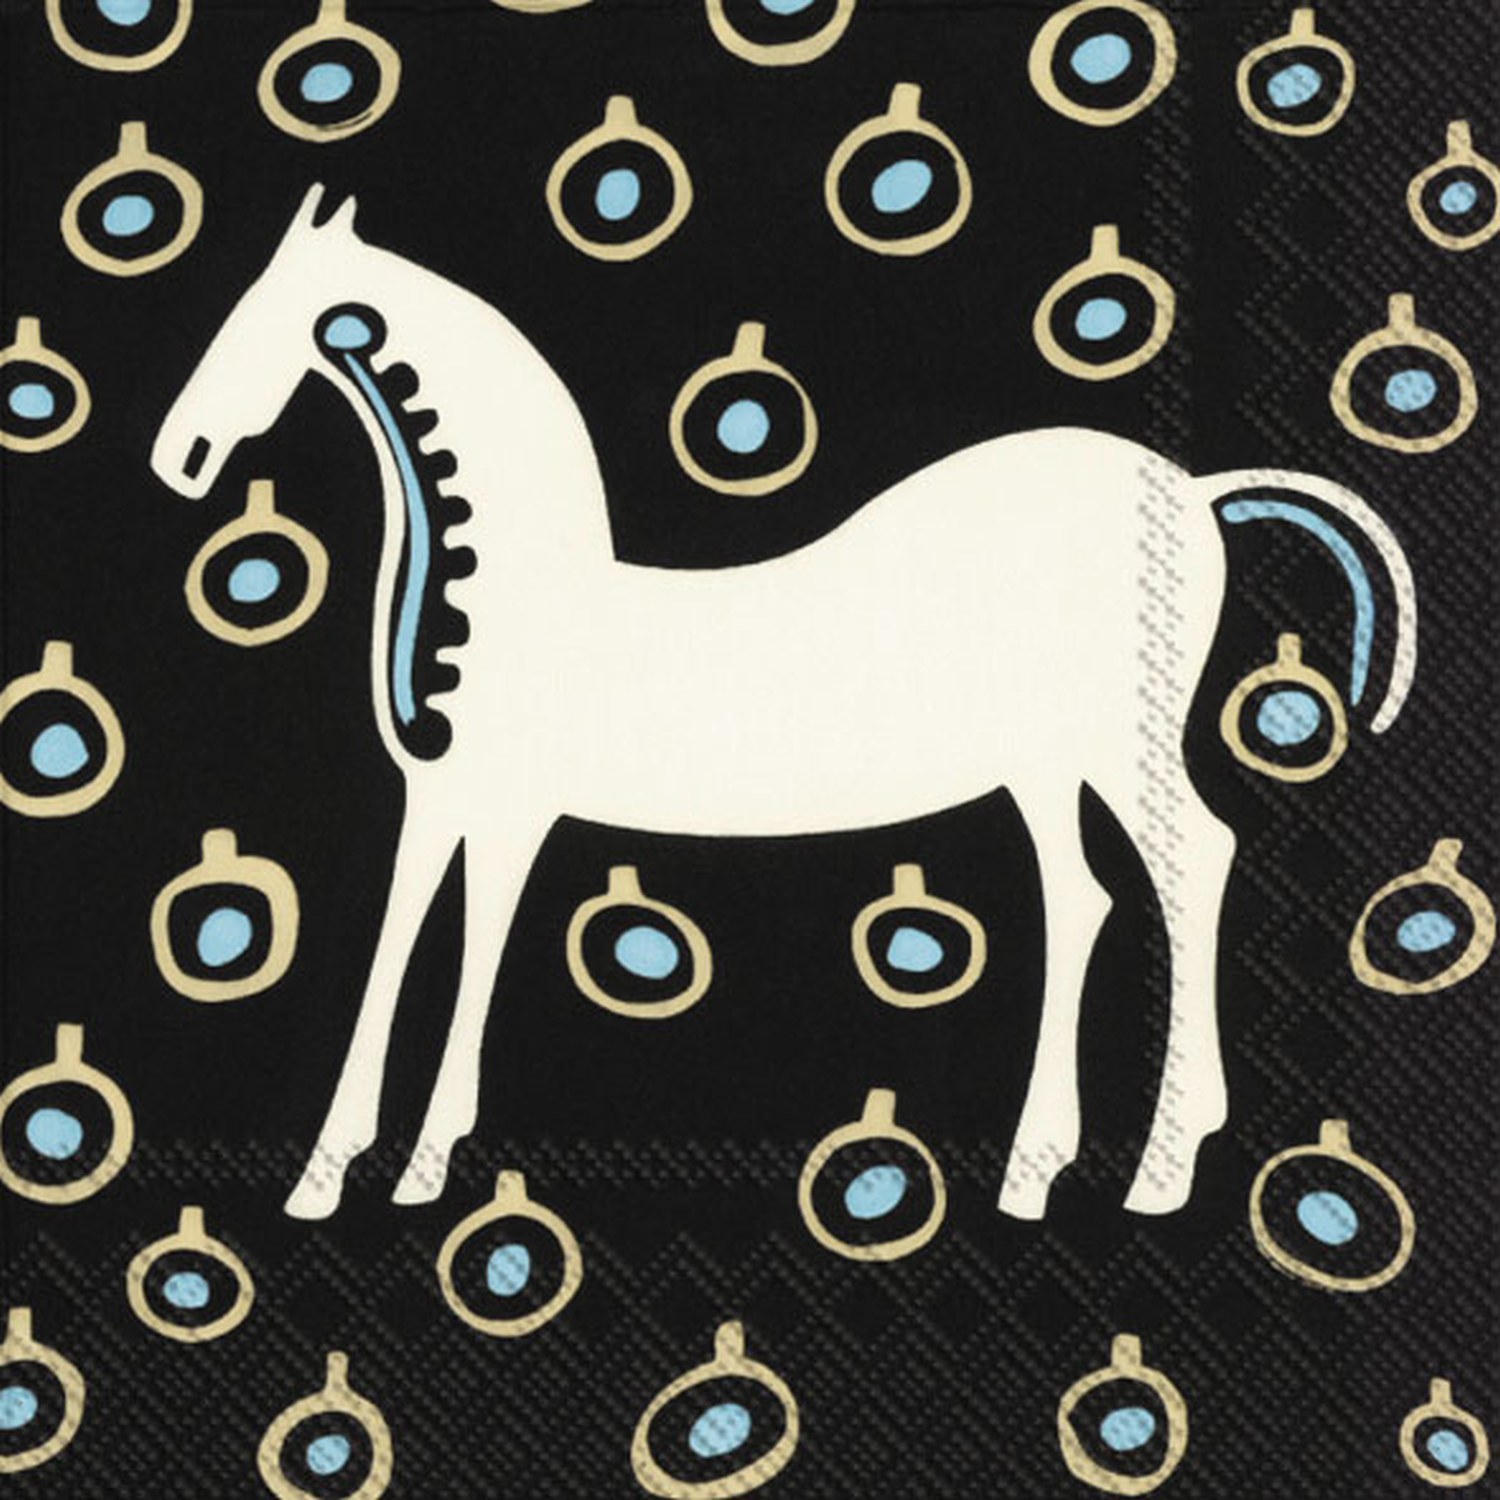 Marimekko Musta Tamma (black mare) paper napkin 33x33 cm 20 pcs dark brown,  blue, yellow | Napkins | Kitchen & Household | Marimekko | Brands |  